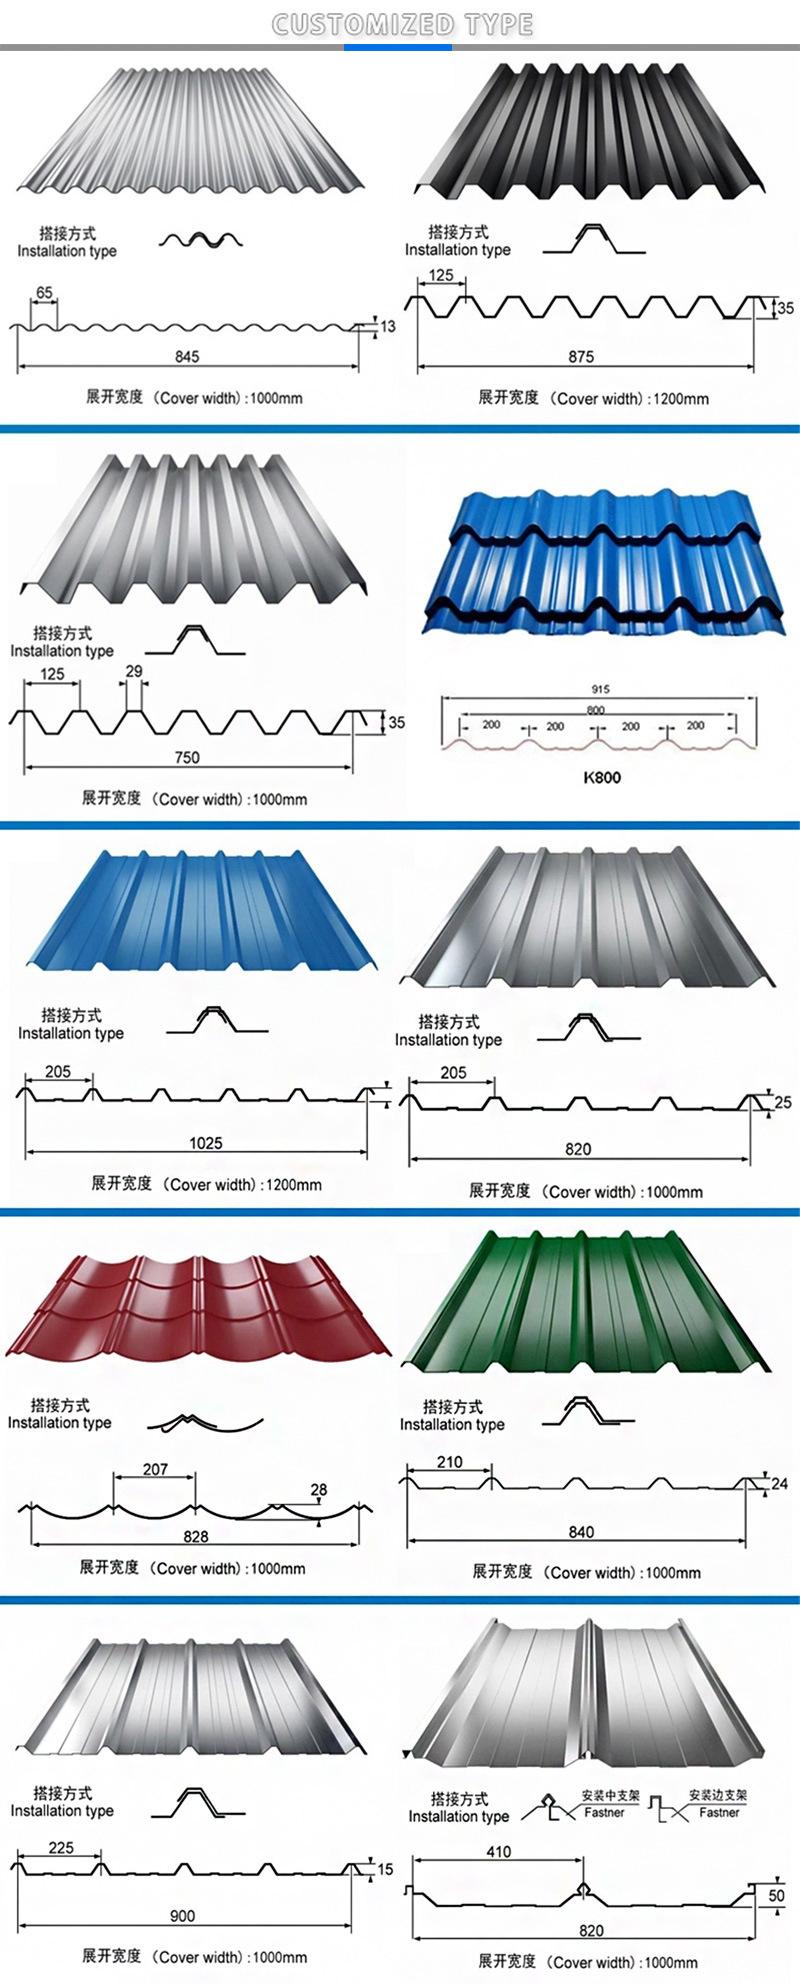 Regular Spangle Gi Metal Galvanized Steel Sheet Roofing Sheets Prices